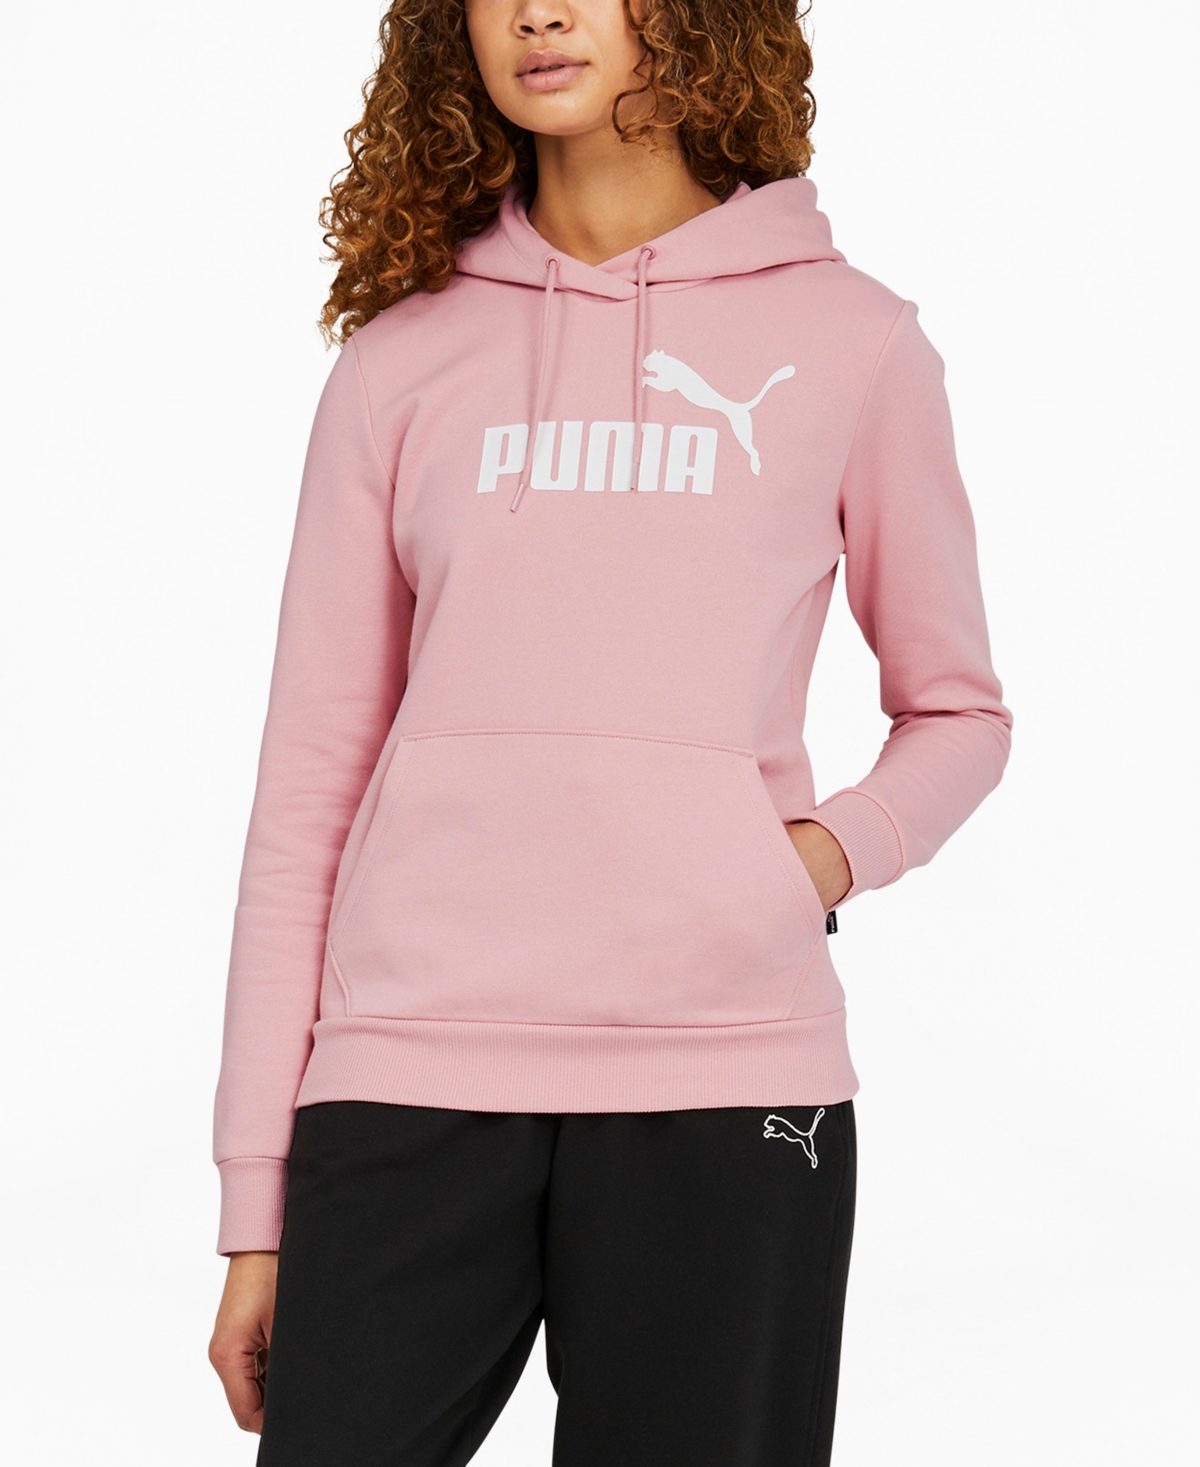  Puma Women's Logo Fleece Sweatshirt Hoodie